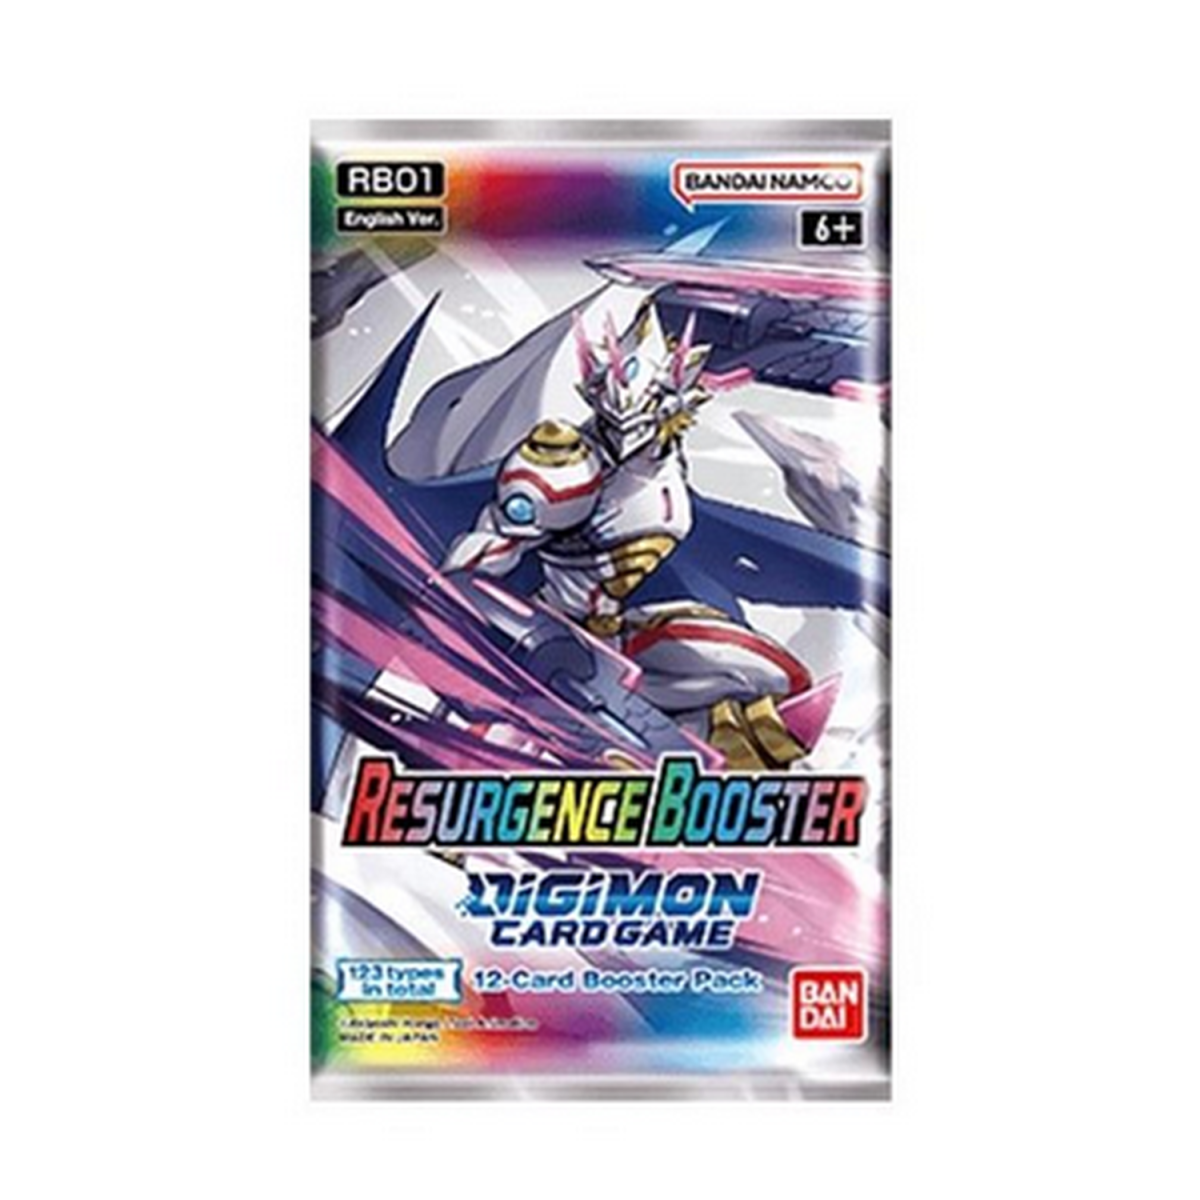 Digimon Card Game - Booster - Resurgence Booster - RB01 - EN